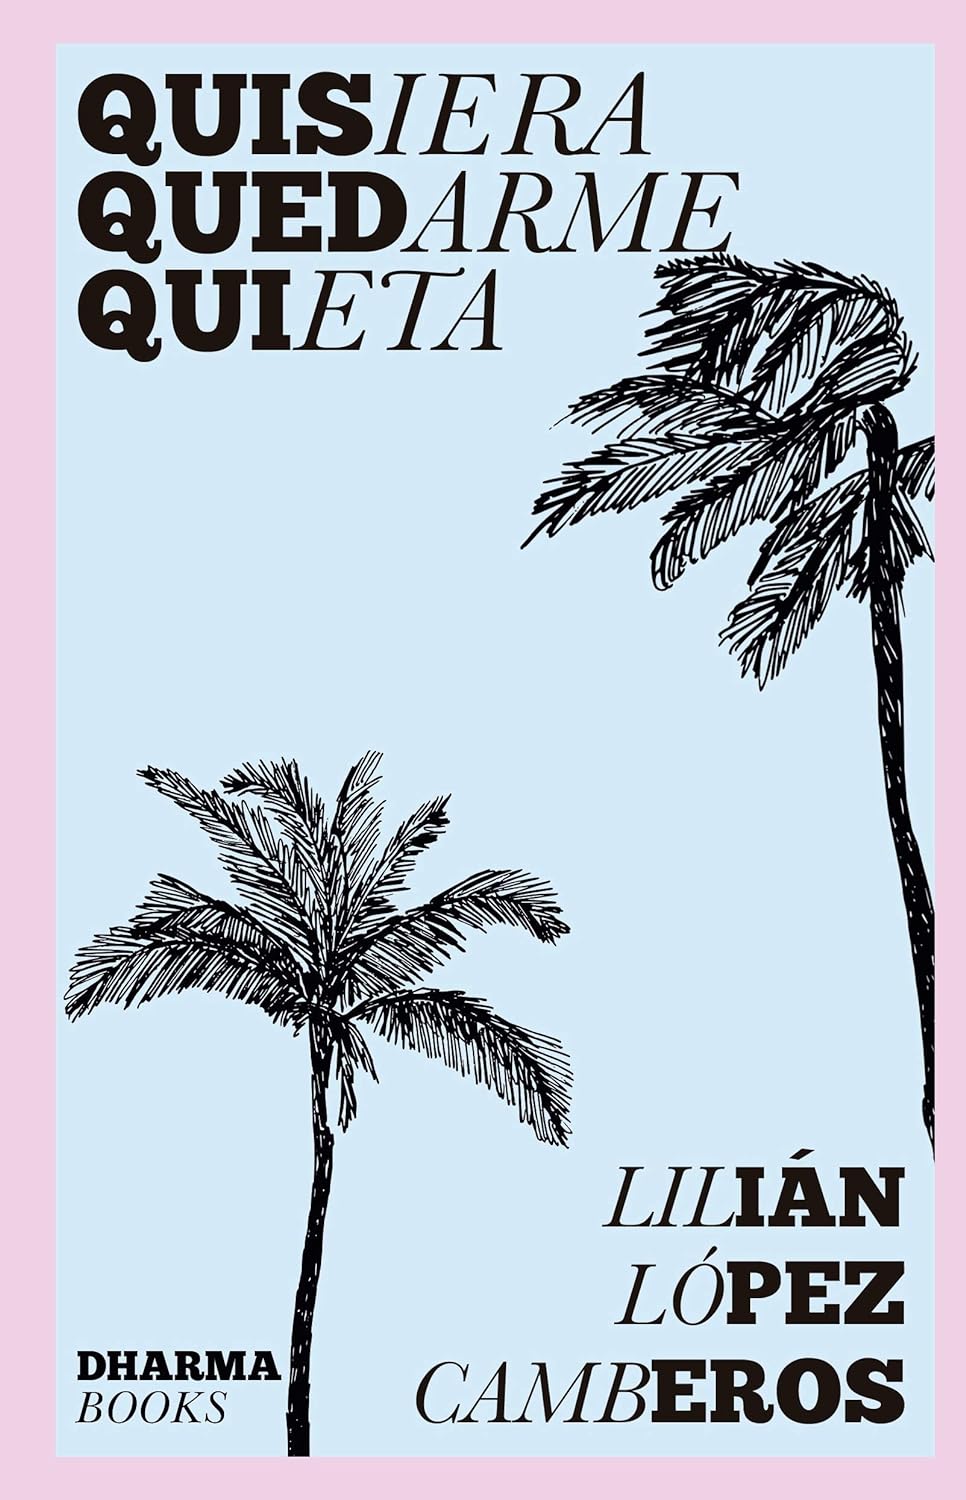 Lilián López Camberos: Quisiera quedarme quieta (Paperback, Spanish language, 2020, Dharma Books + Publishing)